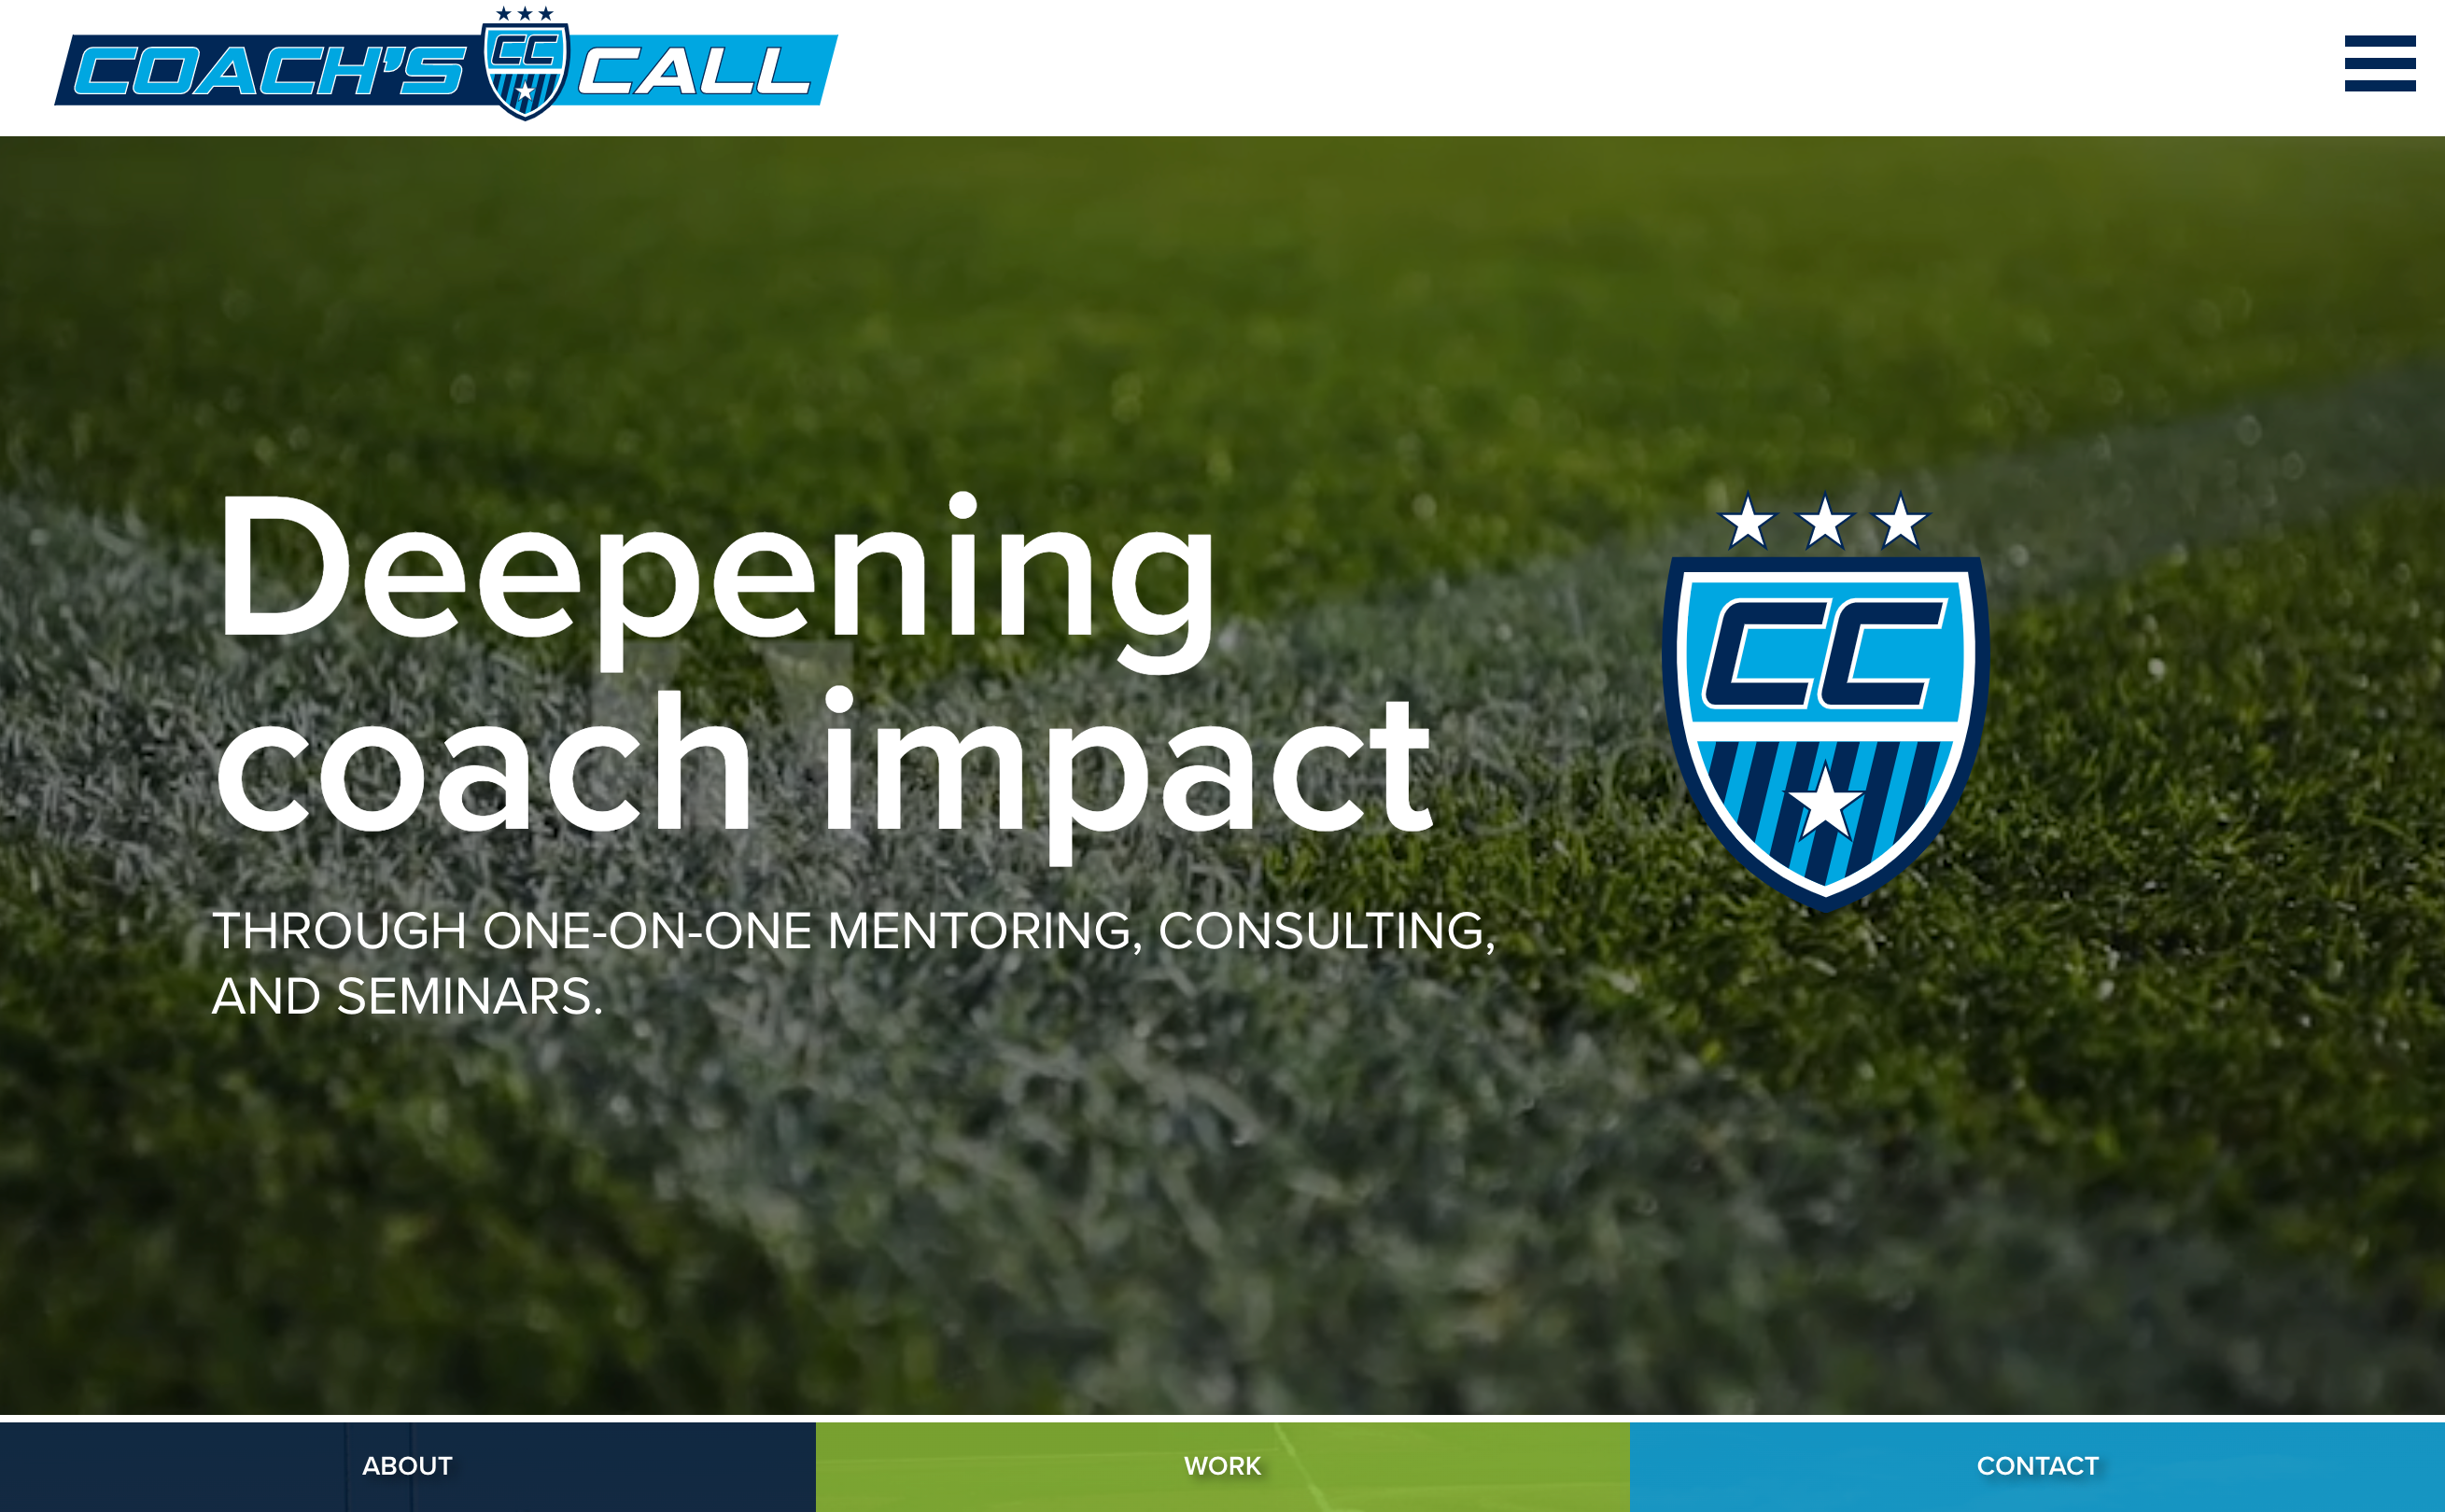 Coach's Call desktop homepage